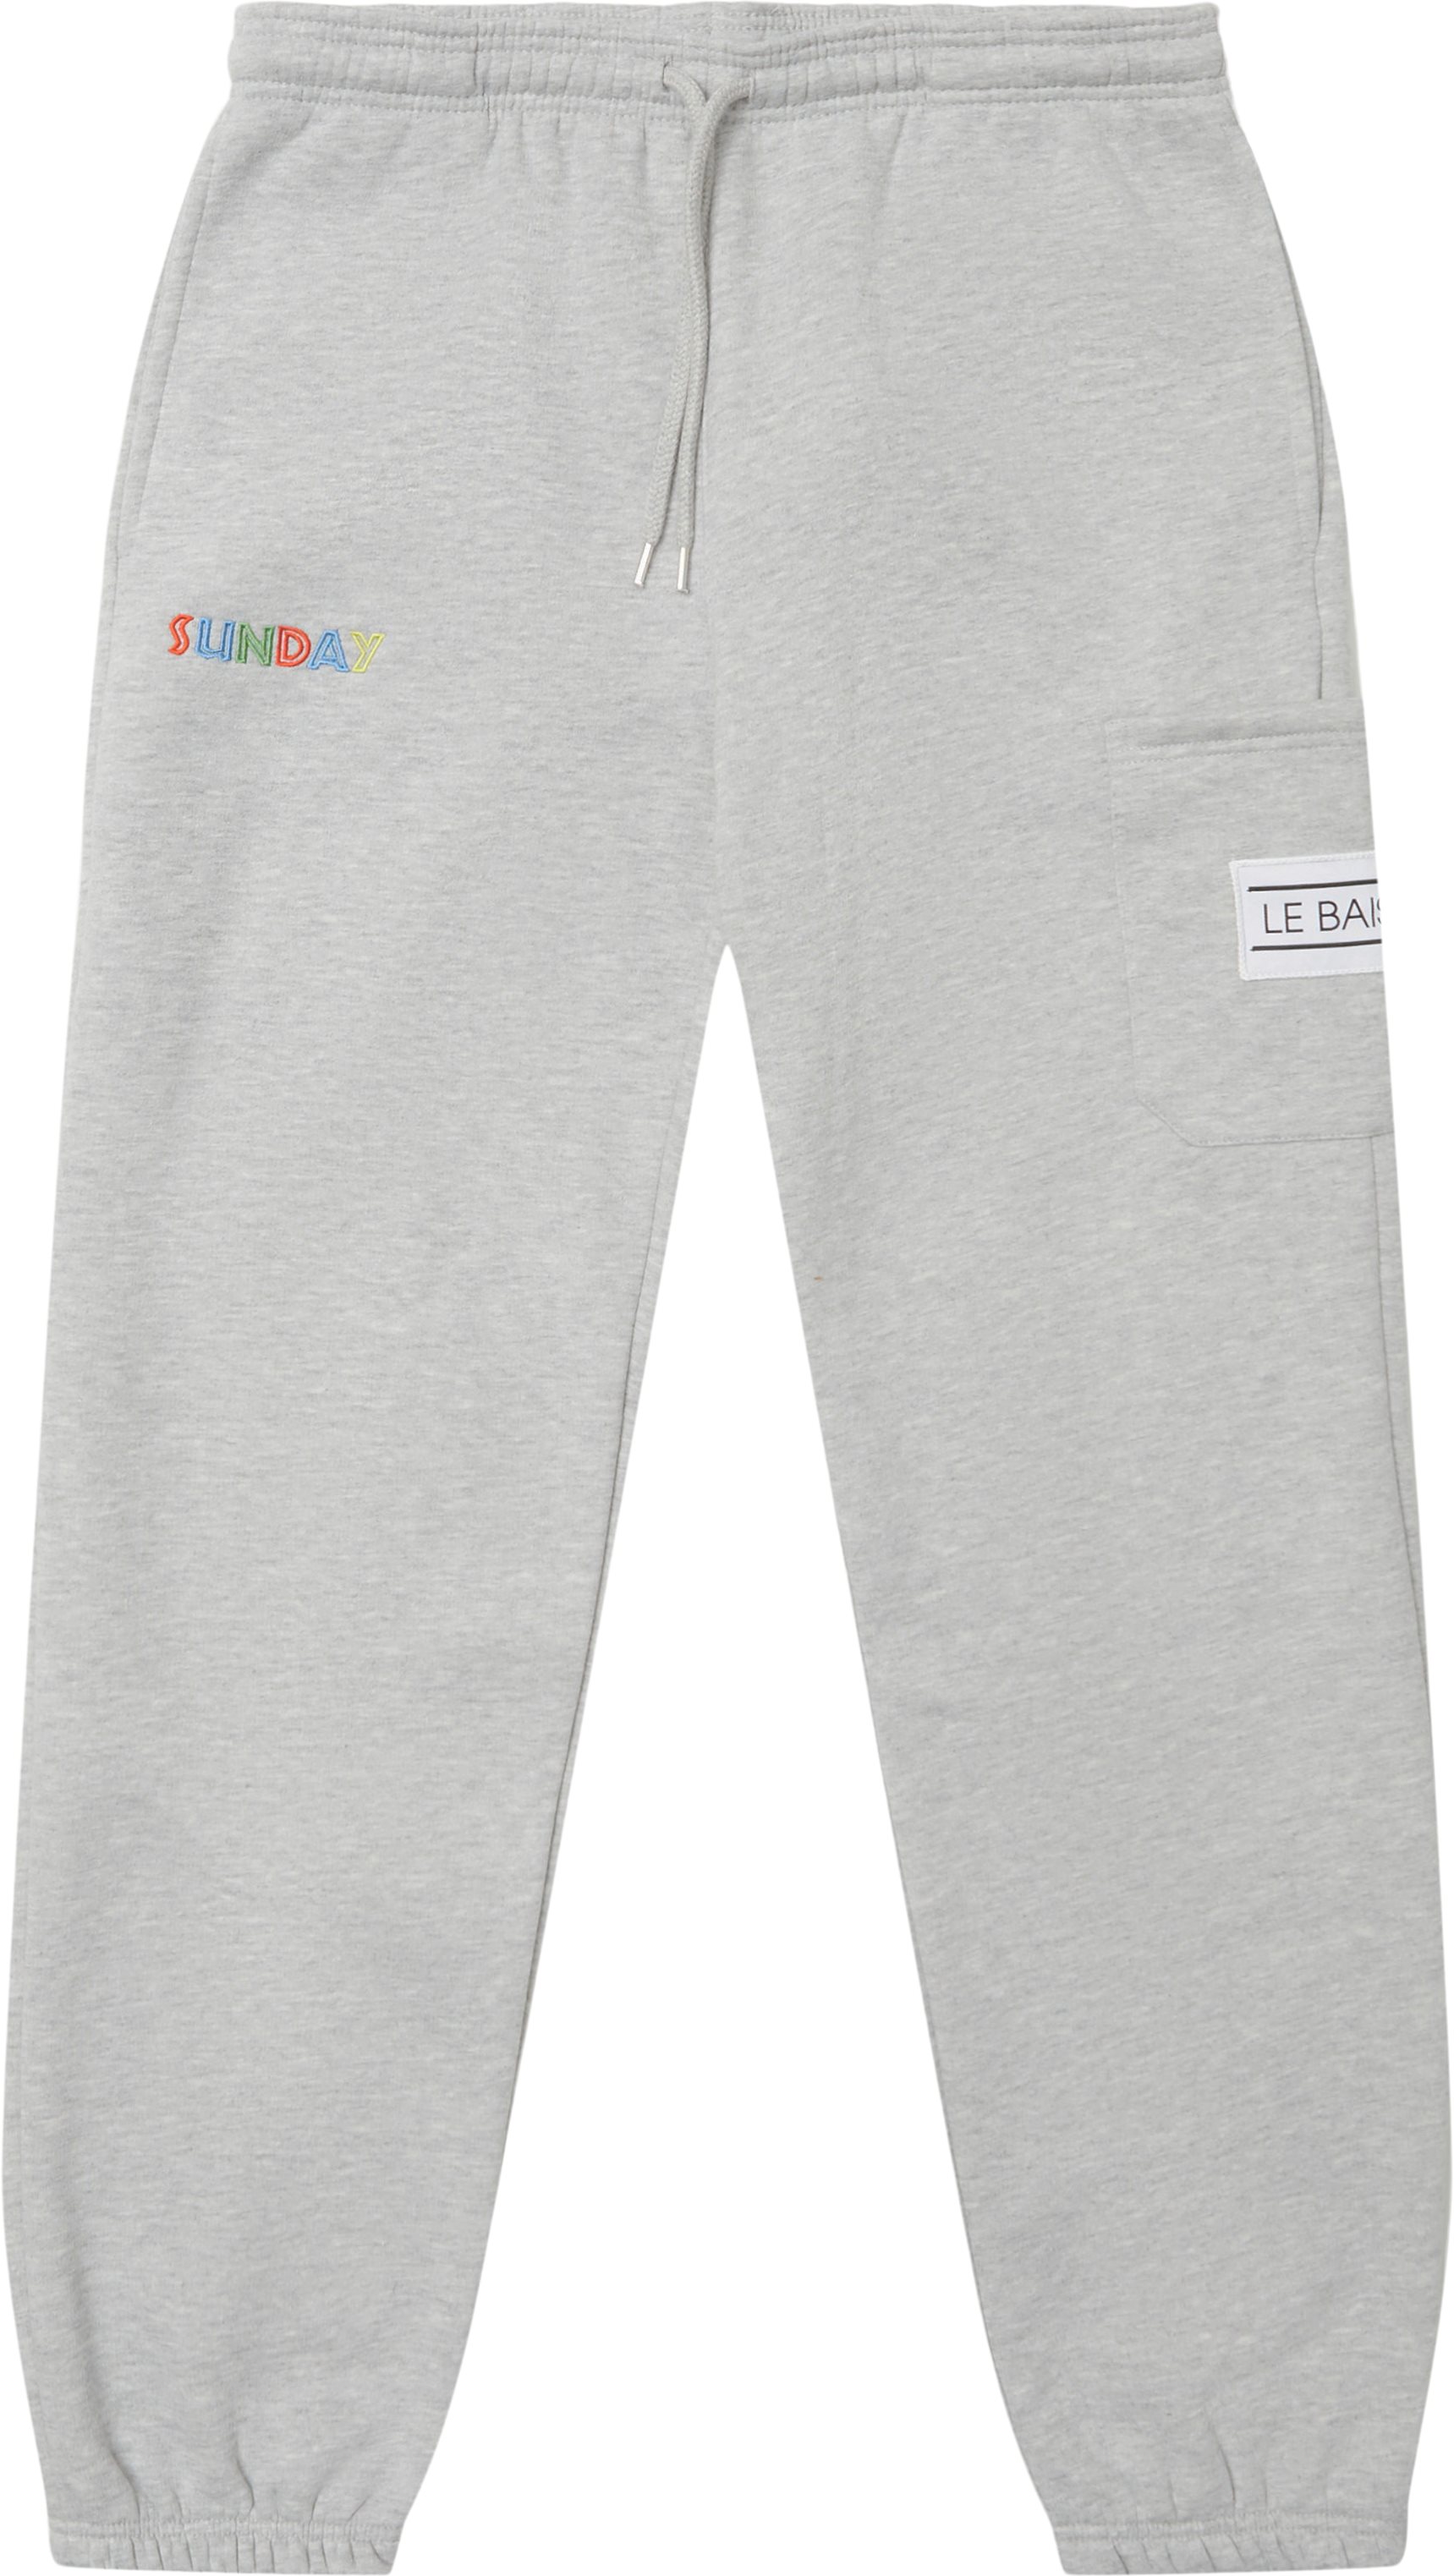 ALGERIA sweatpants - Trousers - Regular fit - Grey